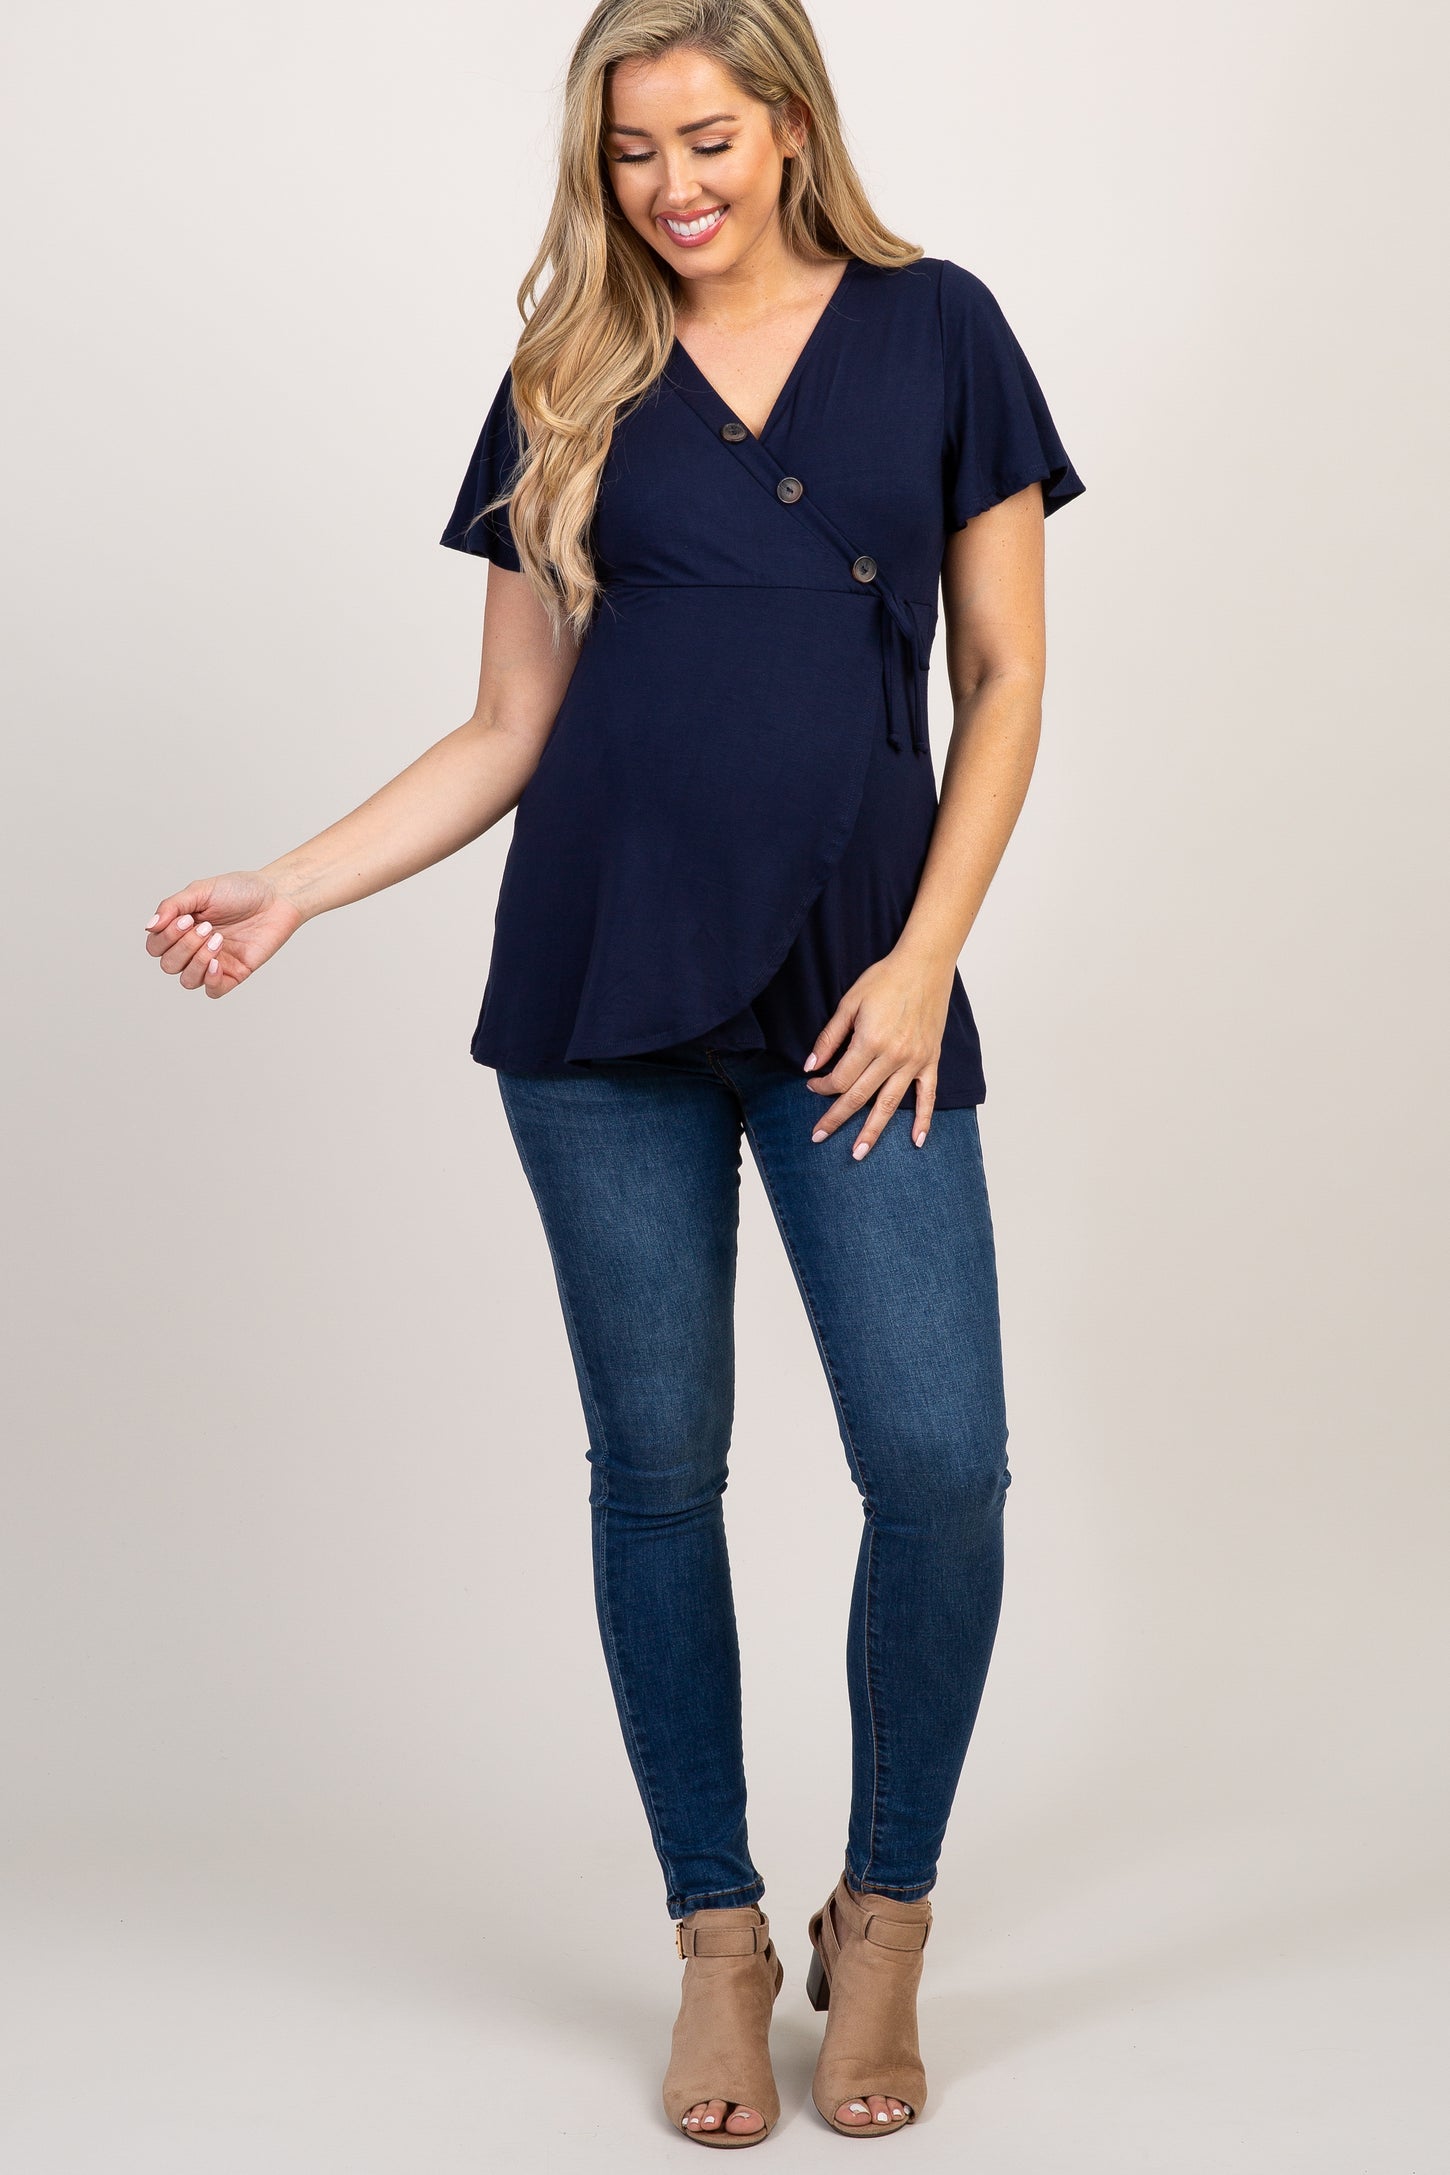 PinkBlush Navy Blue Short Sleeve Button Accent Maternity/Nursing Wrap Top